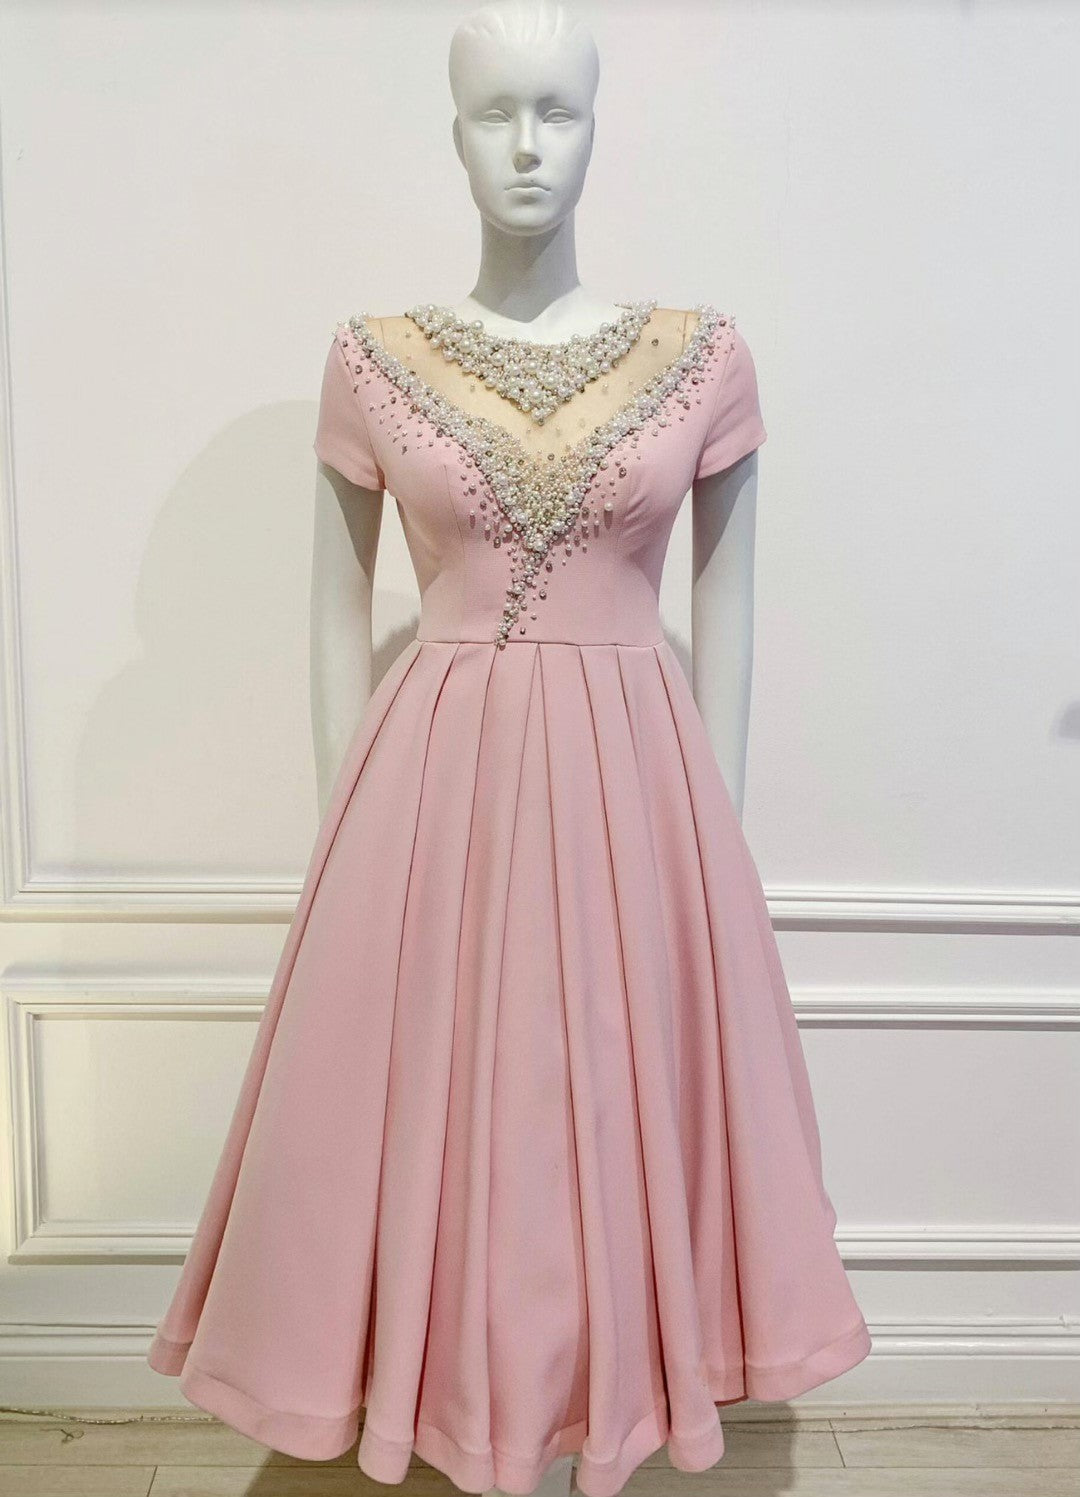 Lolita Dress in Solid Pink - Shop women style vintage, Audrey Hepburn jackets online -Christine